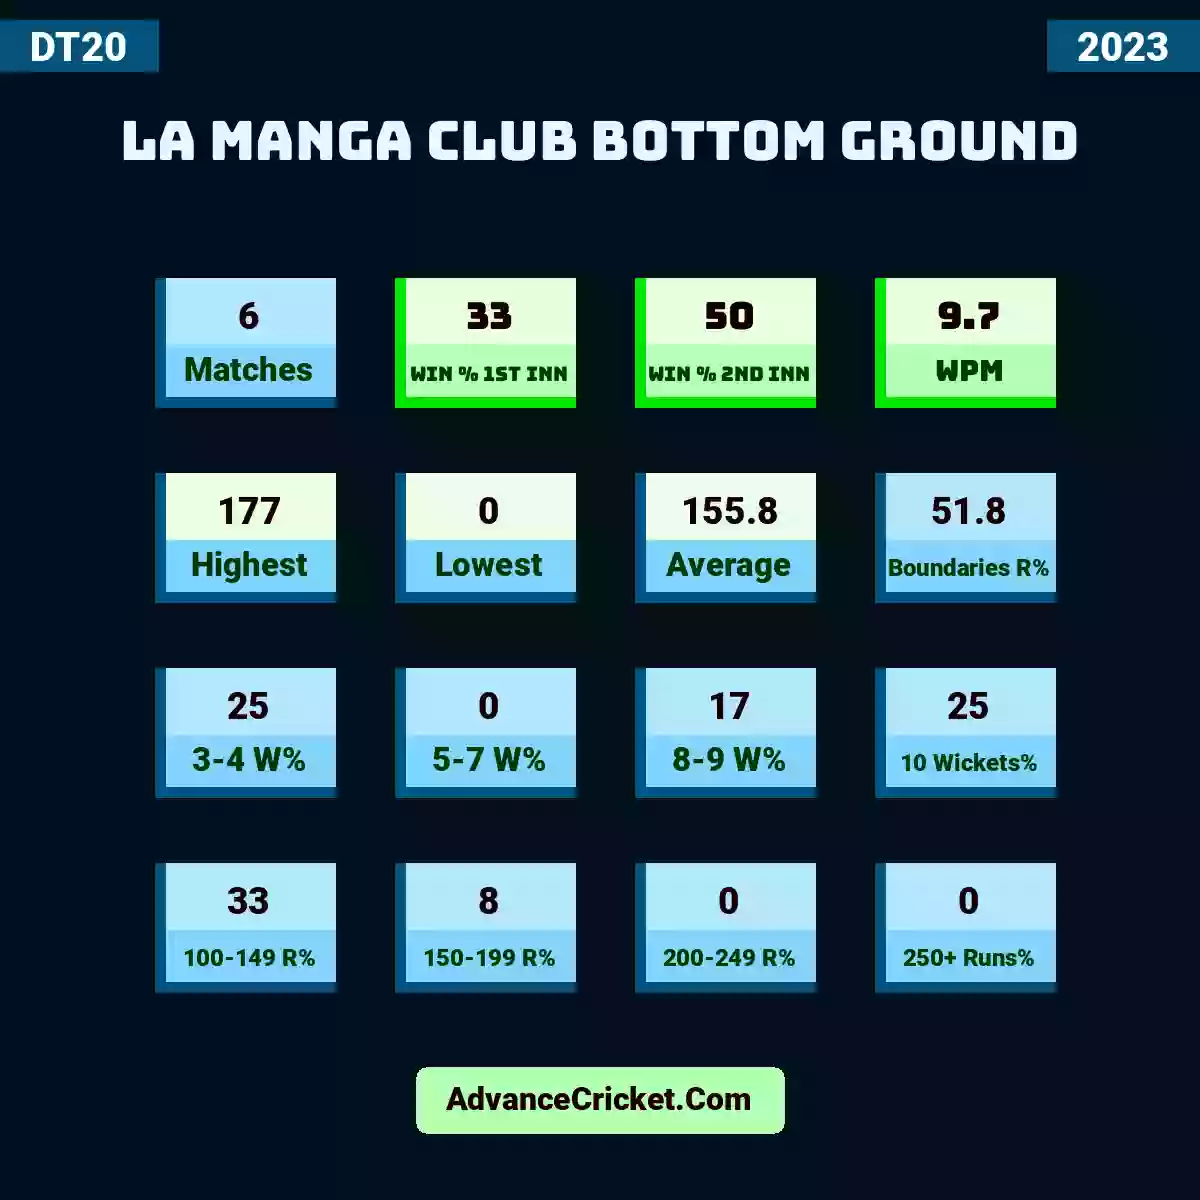 Image showing La Manga Club Bottom Ground with Matches: 6, Win % 1st Inn: 33, Win % 2nd Inn: 50, WPM: 9.7, Highest: 177, Lowest: 0, Average: 155.8, Boundaries R%: 51.8, 3-4 W%: 25, 5-7 W%: 0, 8-9 W%: 17, 10 Wickets%: 25, 100-149 R%: 33, 150-199 R%: 8, 200-249 R%: 0, 250+ Runs%: 0.